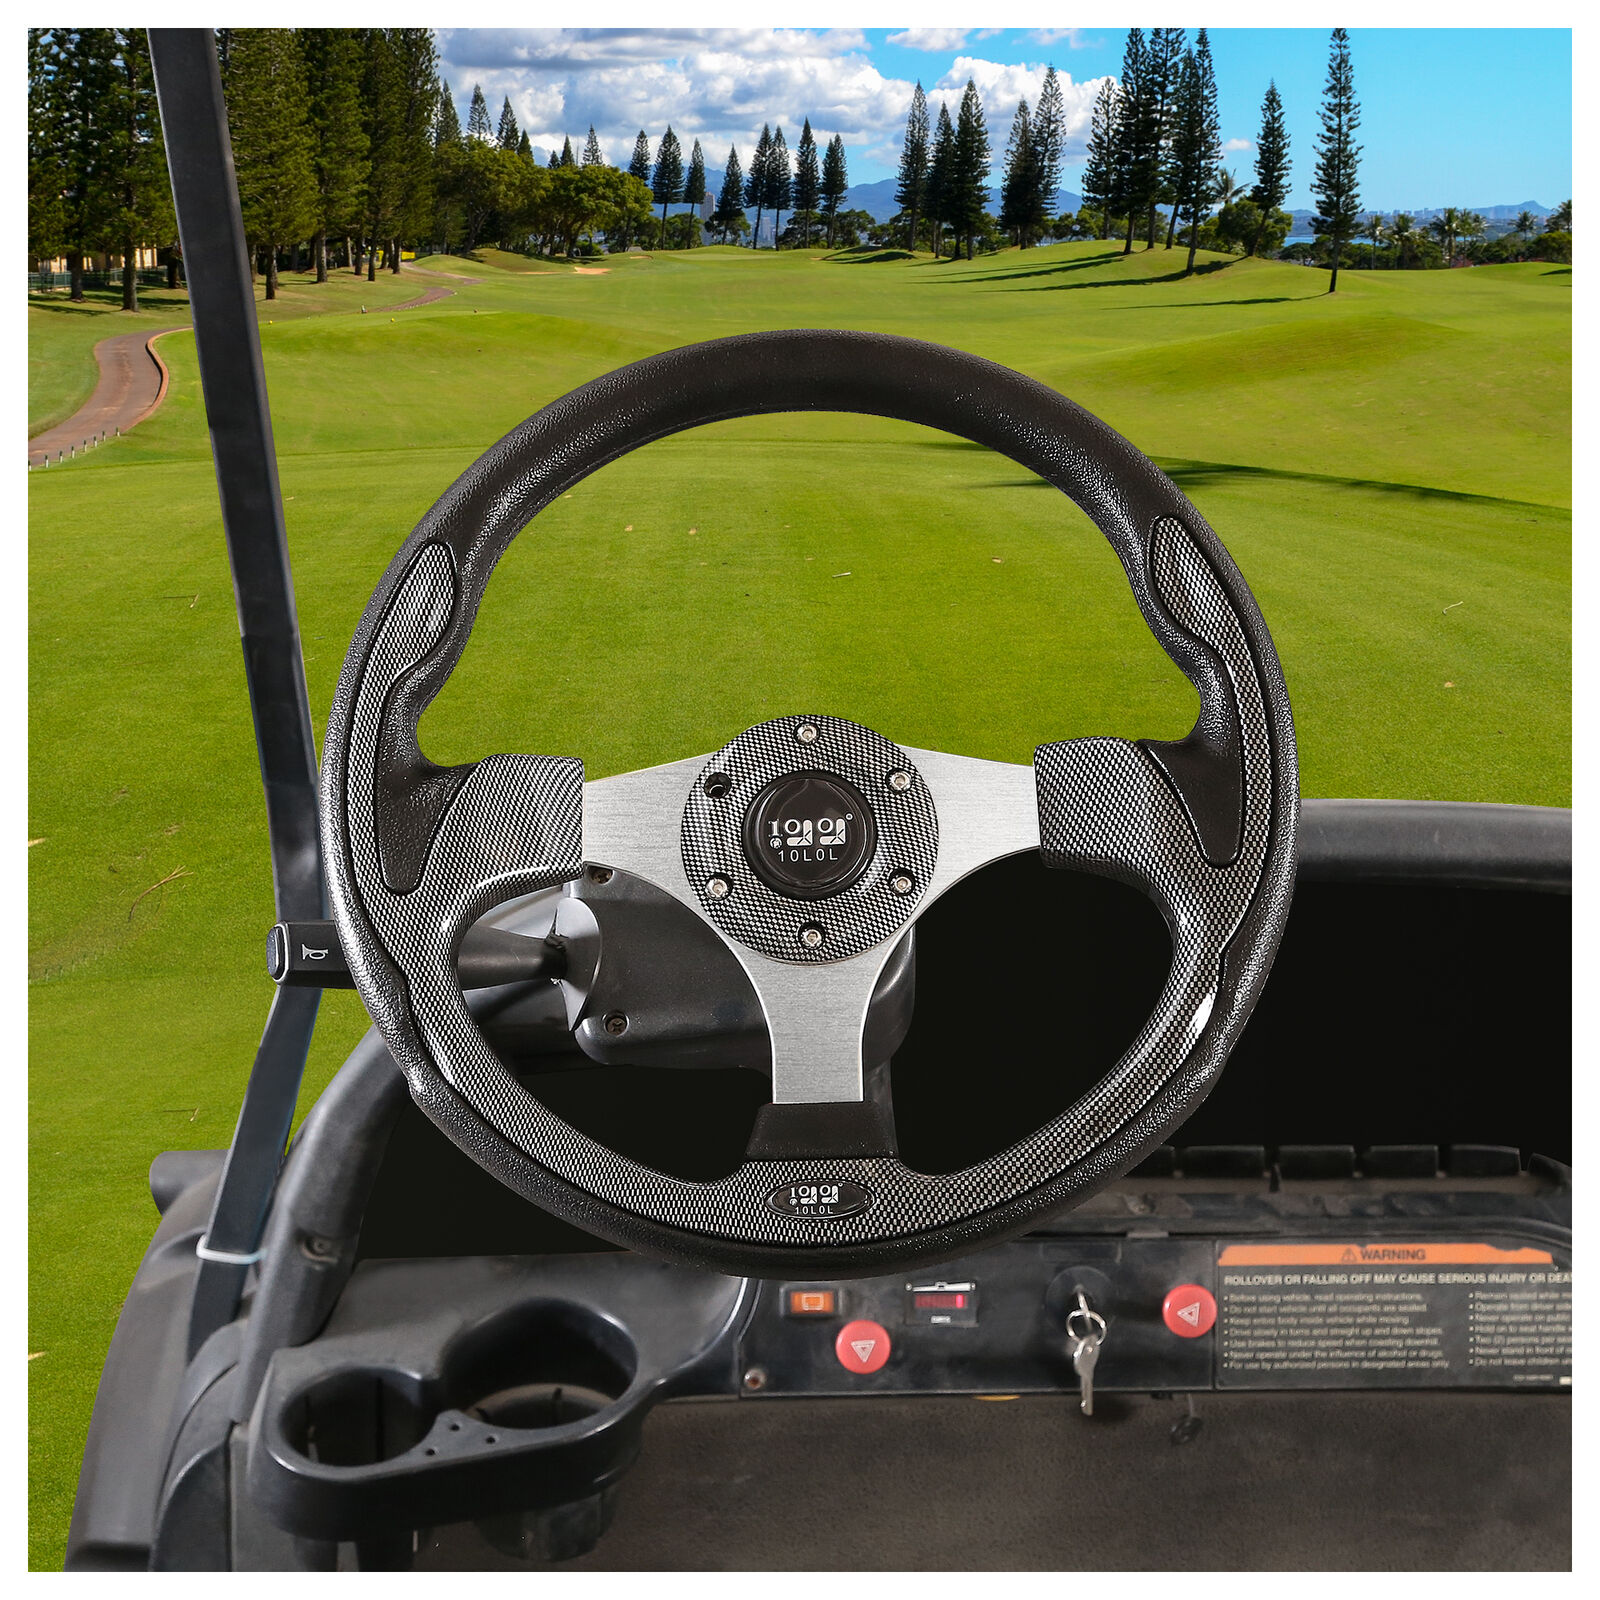 10L0L Golf Cart Steering Wheel & Black Hub Adapter for Club Car Precedent only